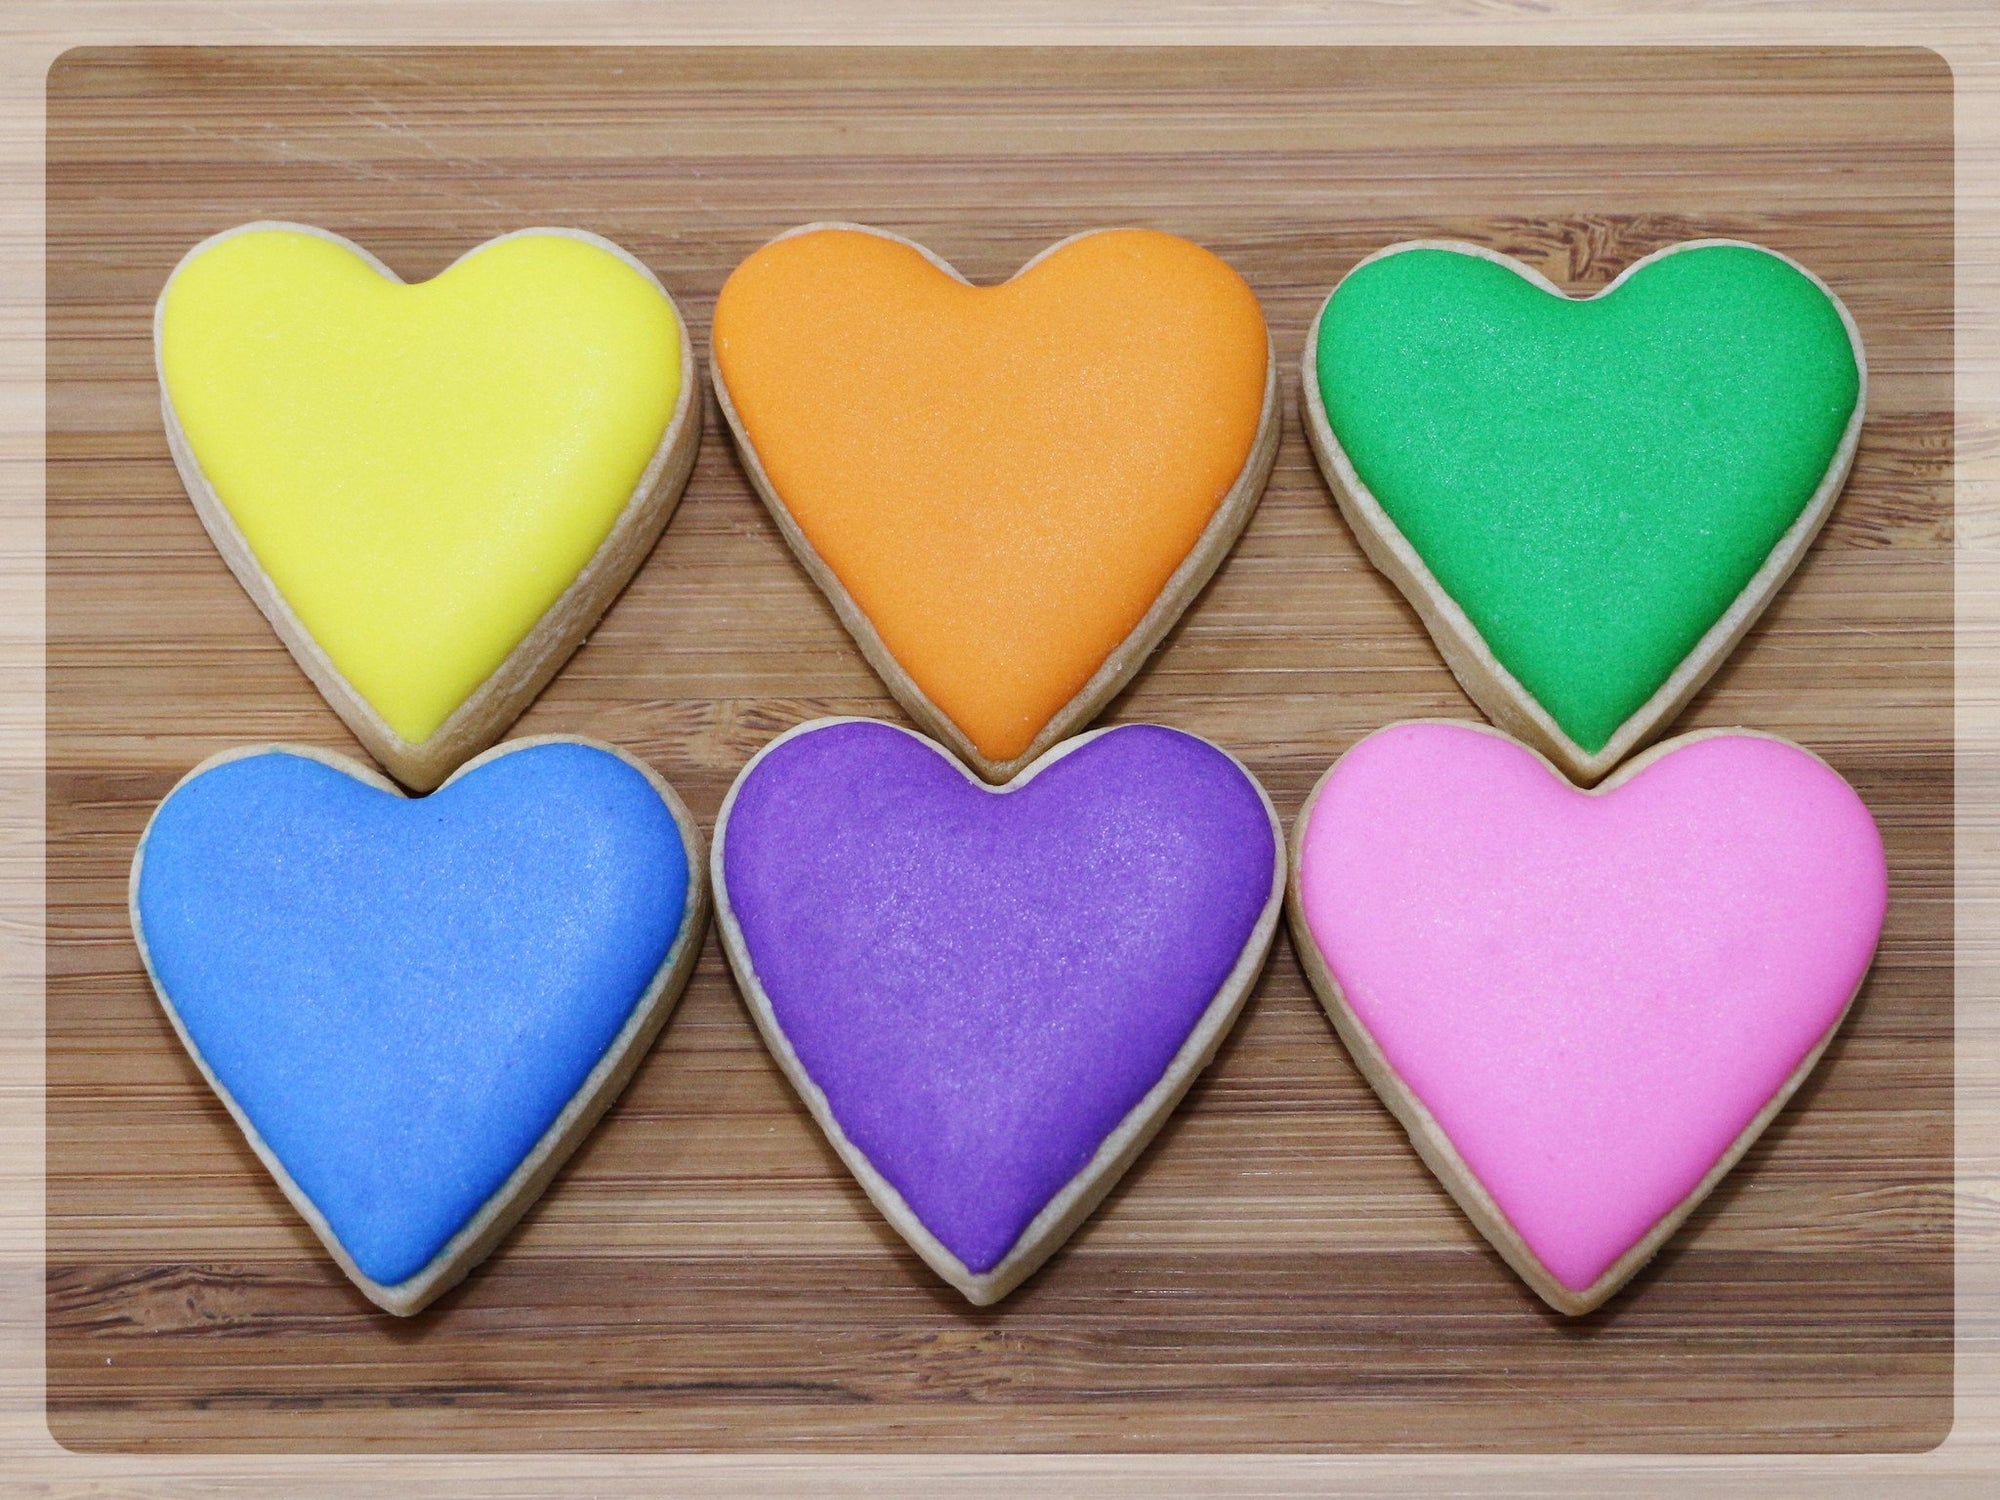 Petit Fours - Cookies - Mini Hearts - Treats2eat